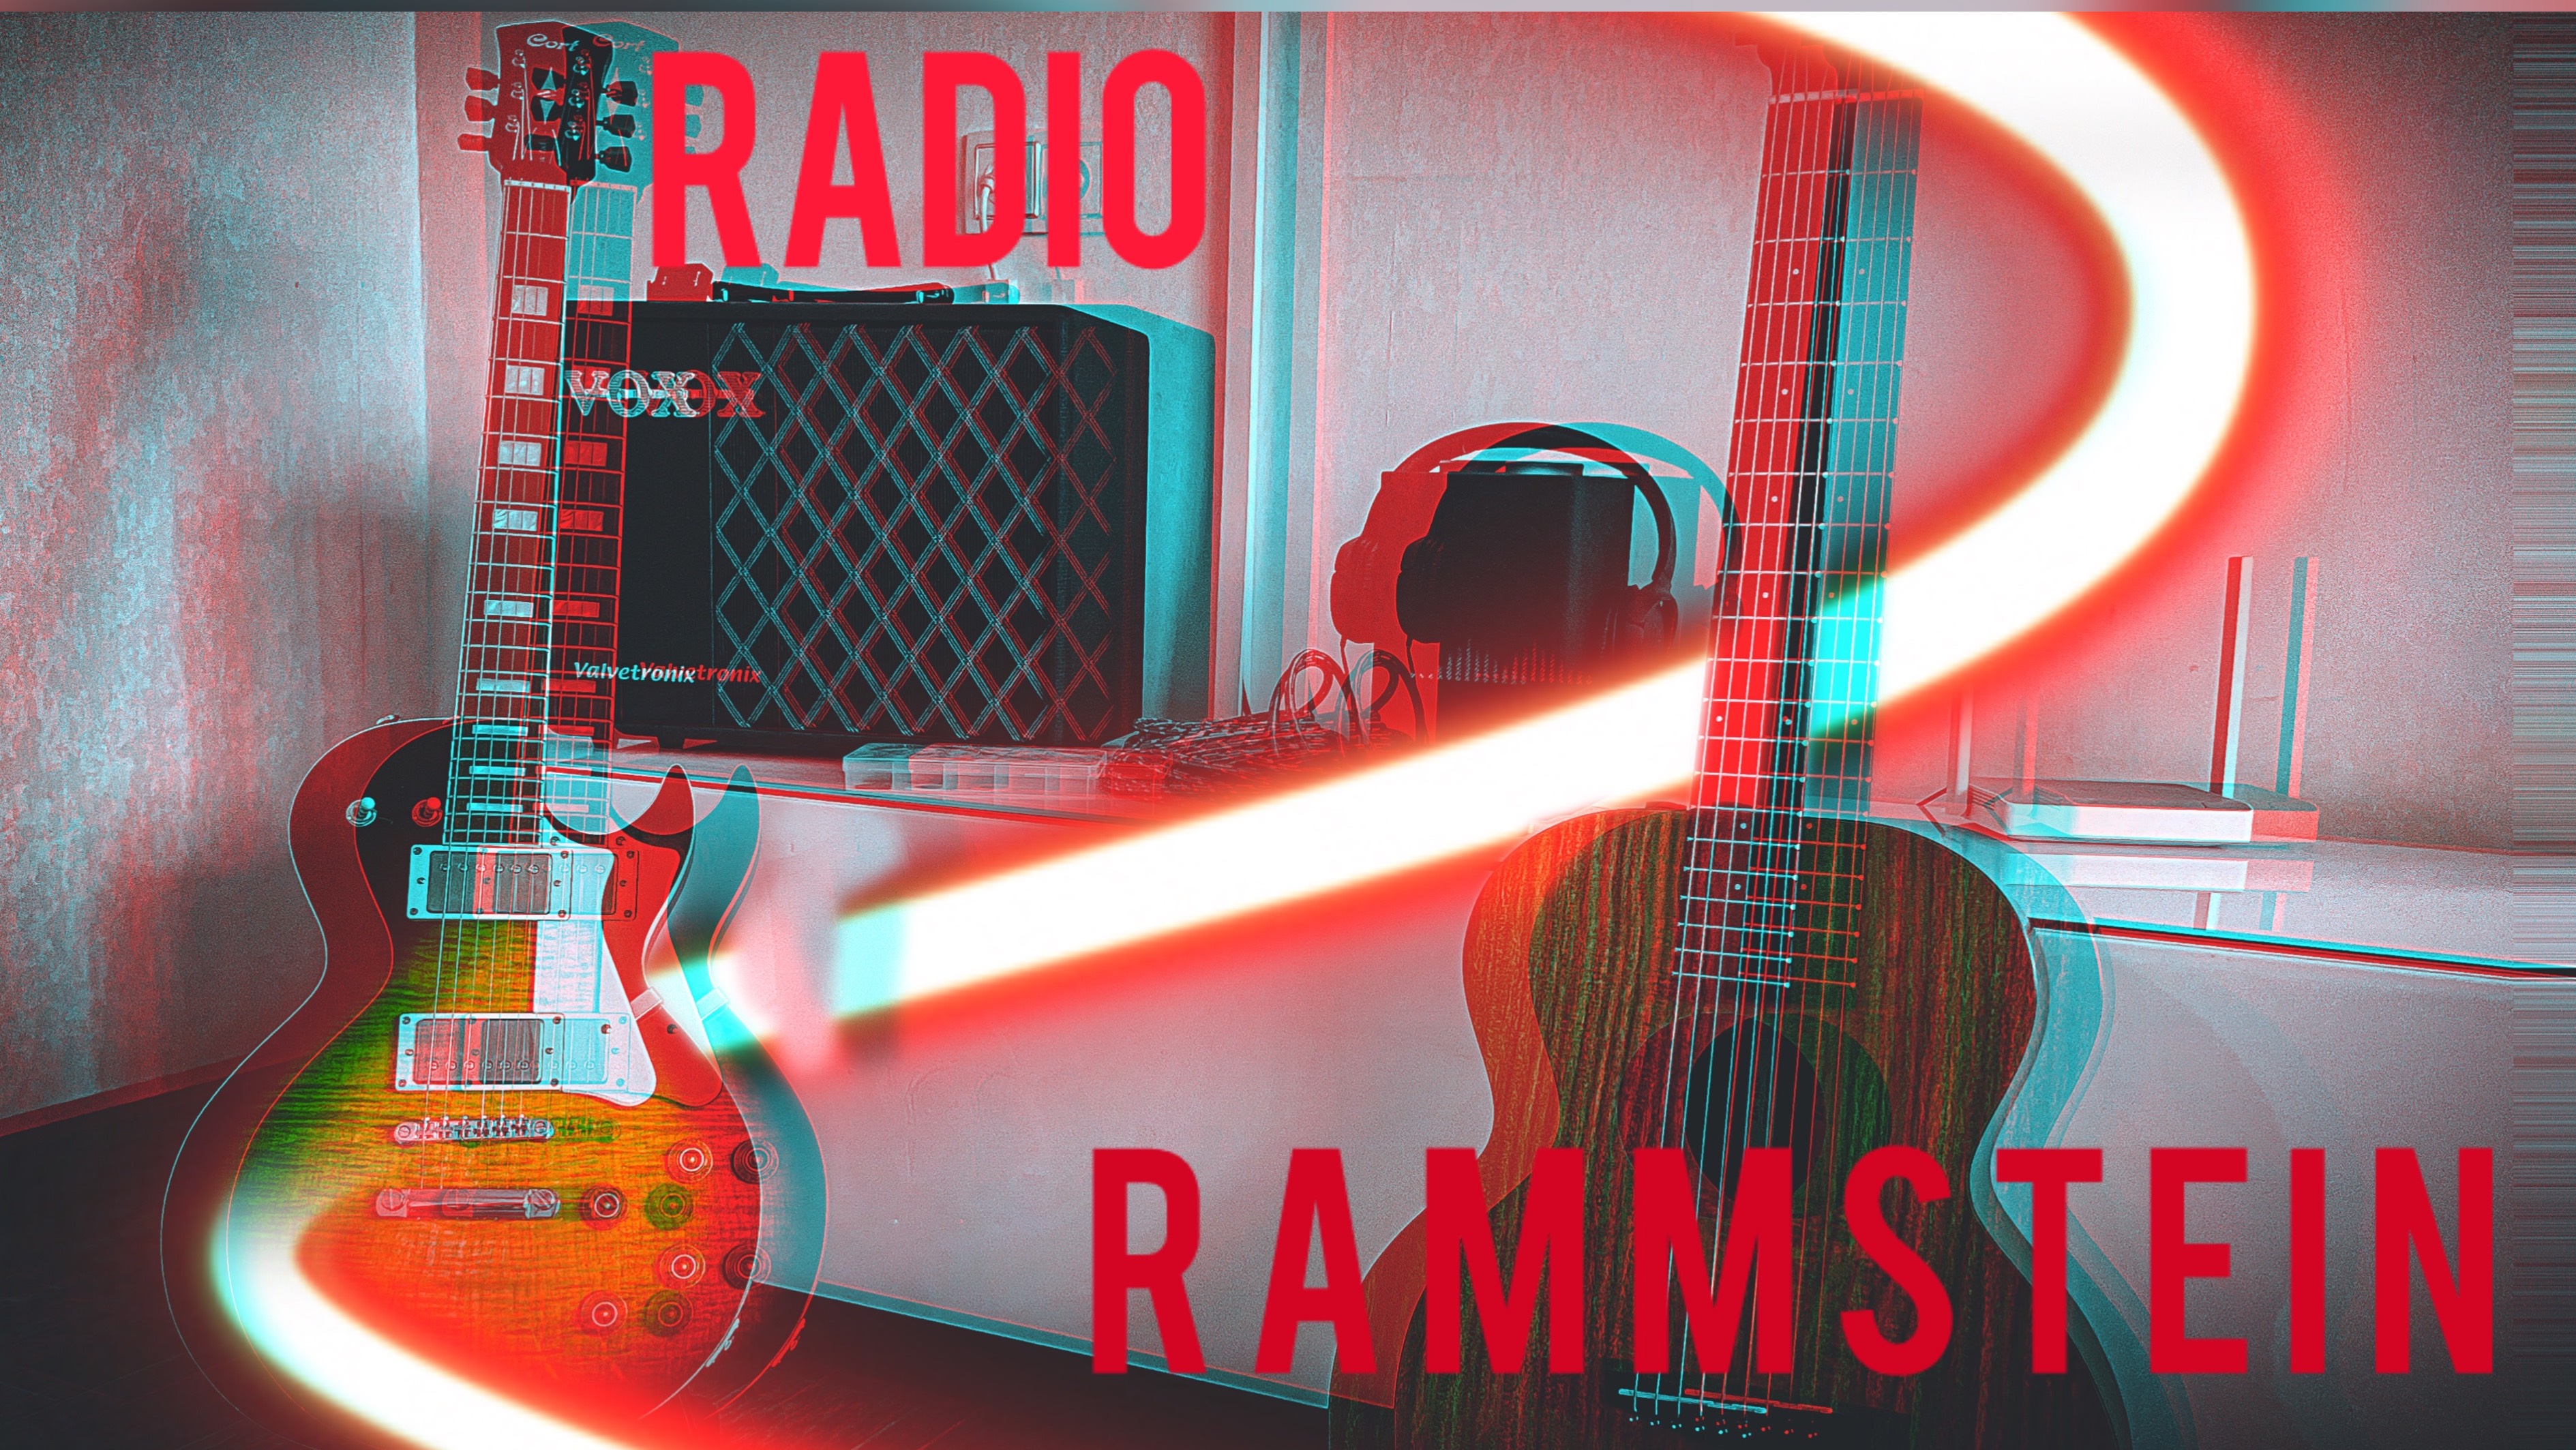 Rammstein-Radio (Guitar cover)